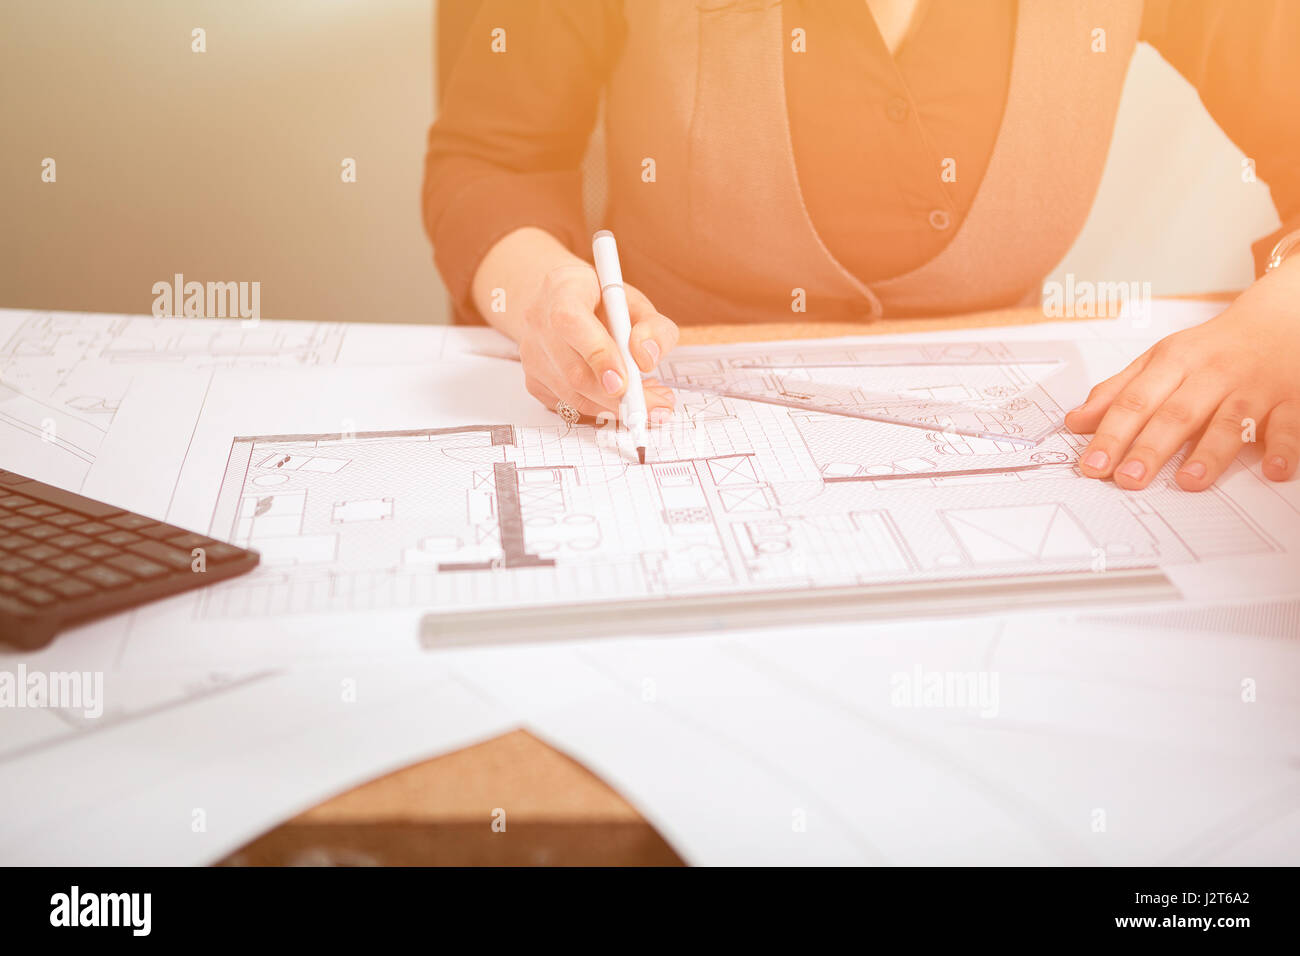 Details shot of architect blueprints on a desk Stock Photo